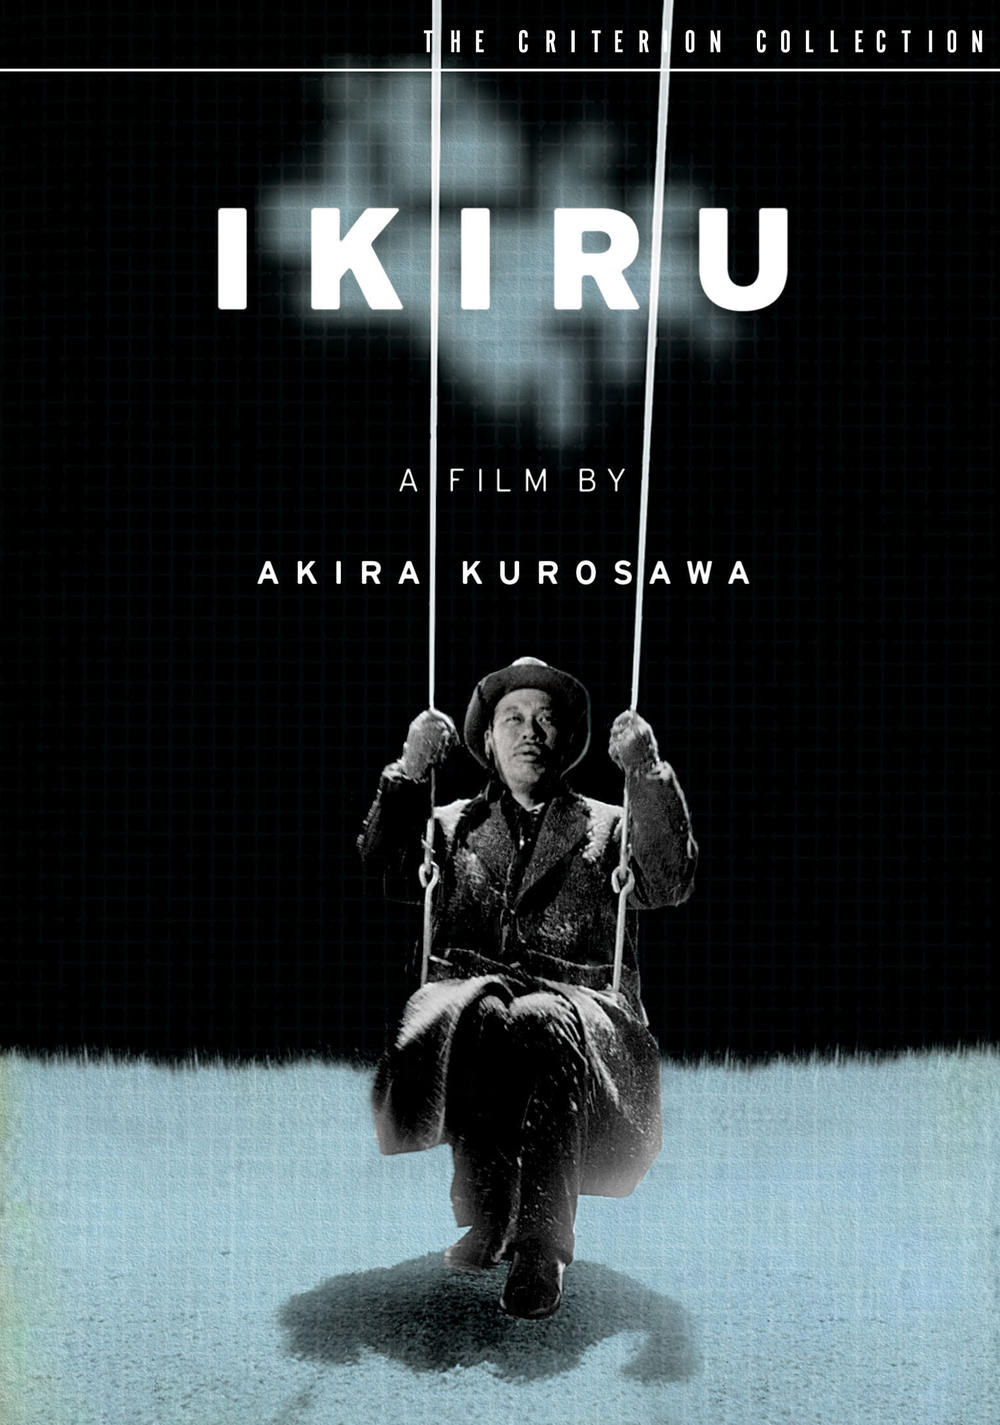 Akira Kurosawa's film <em>Ikiru</em> came out in 1952